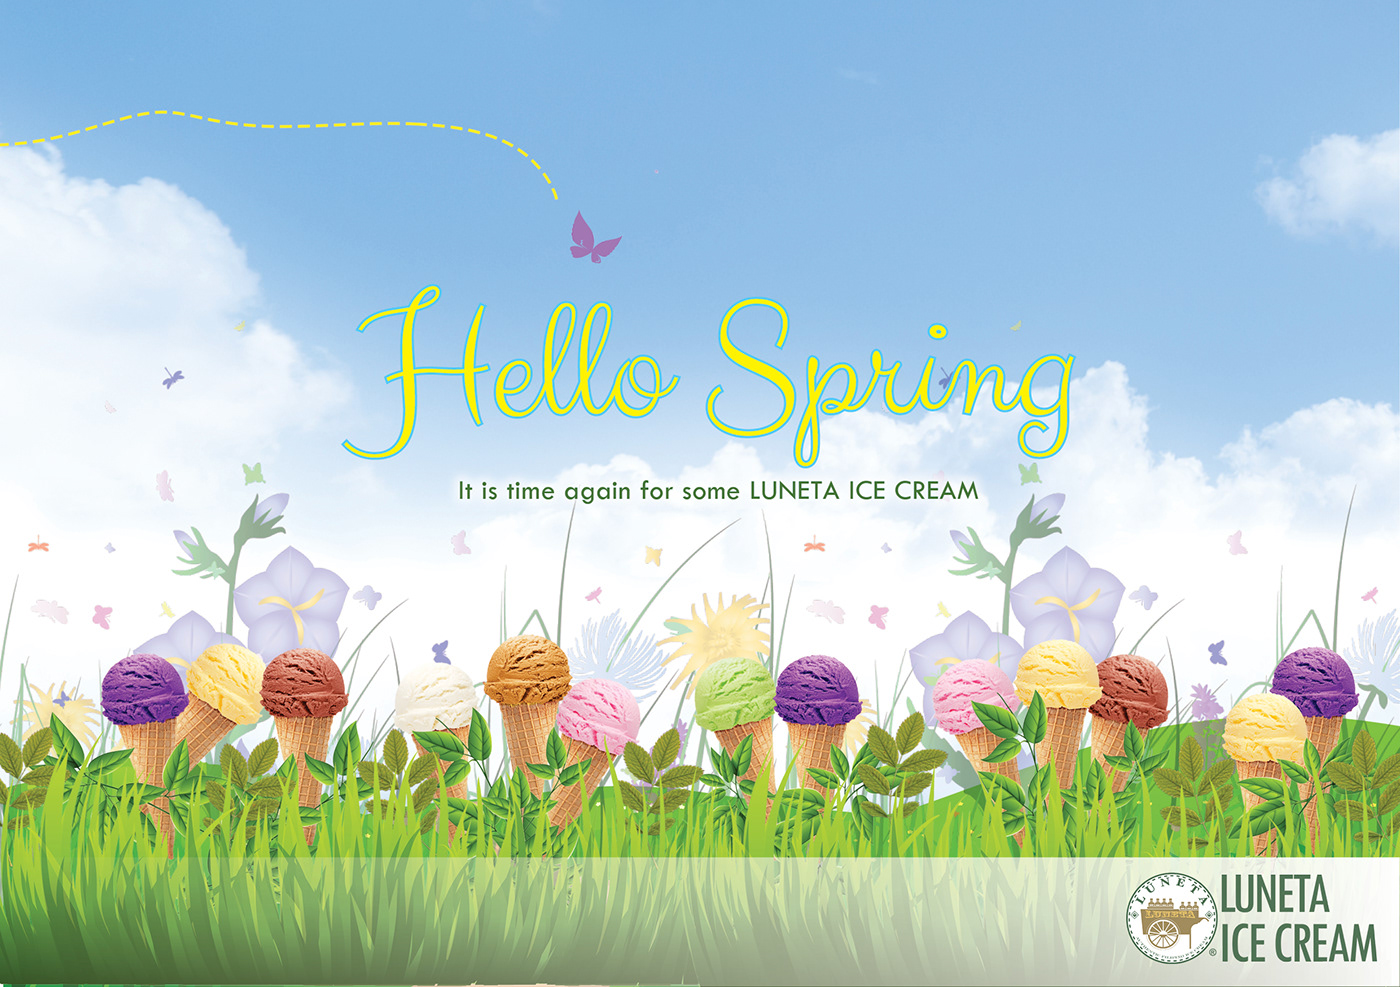 ice cream filipino Europe campaigns advertisements flyers digital